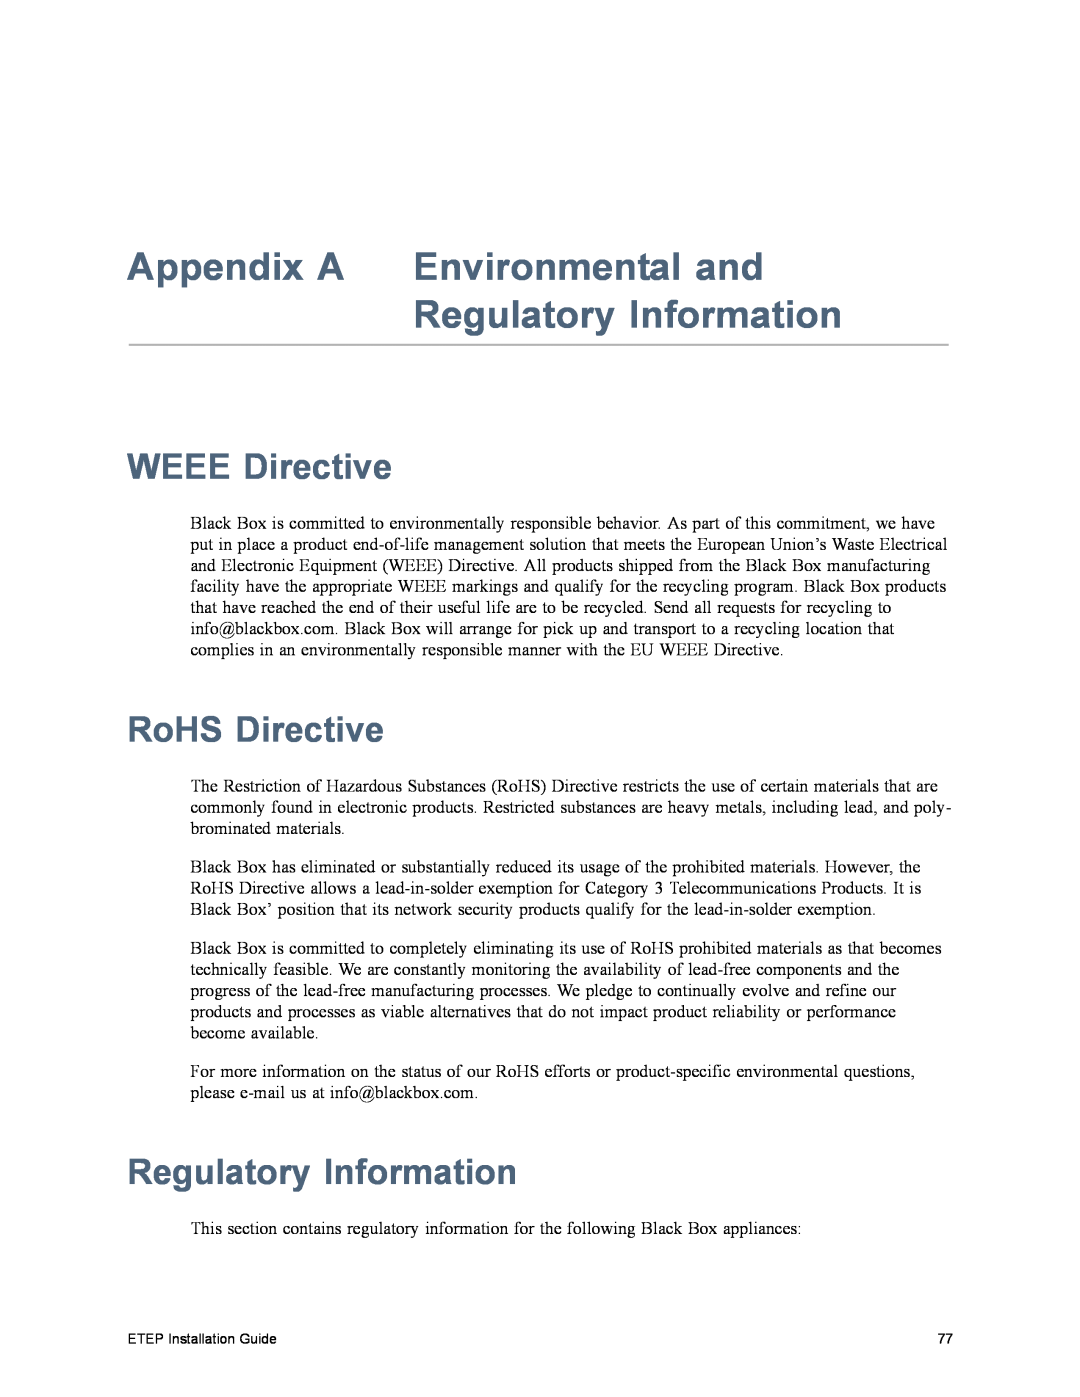 Black Box ET0100A, ET1000A, ET0010A Appendix A Environmental and Regulatory Information, WEEE Directive, RoHS Directive 